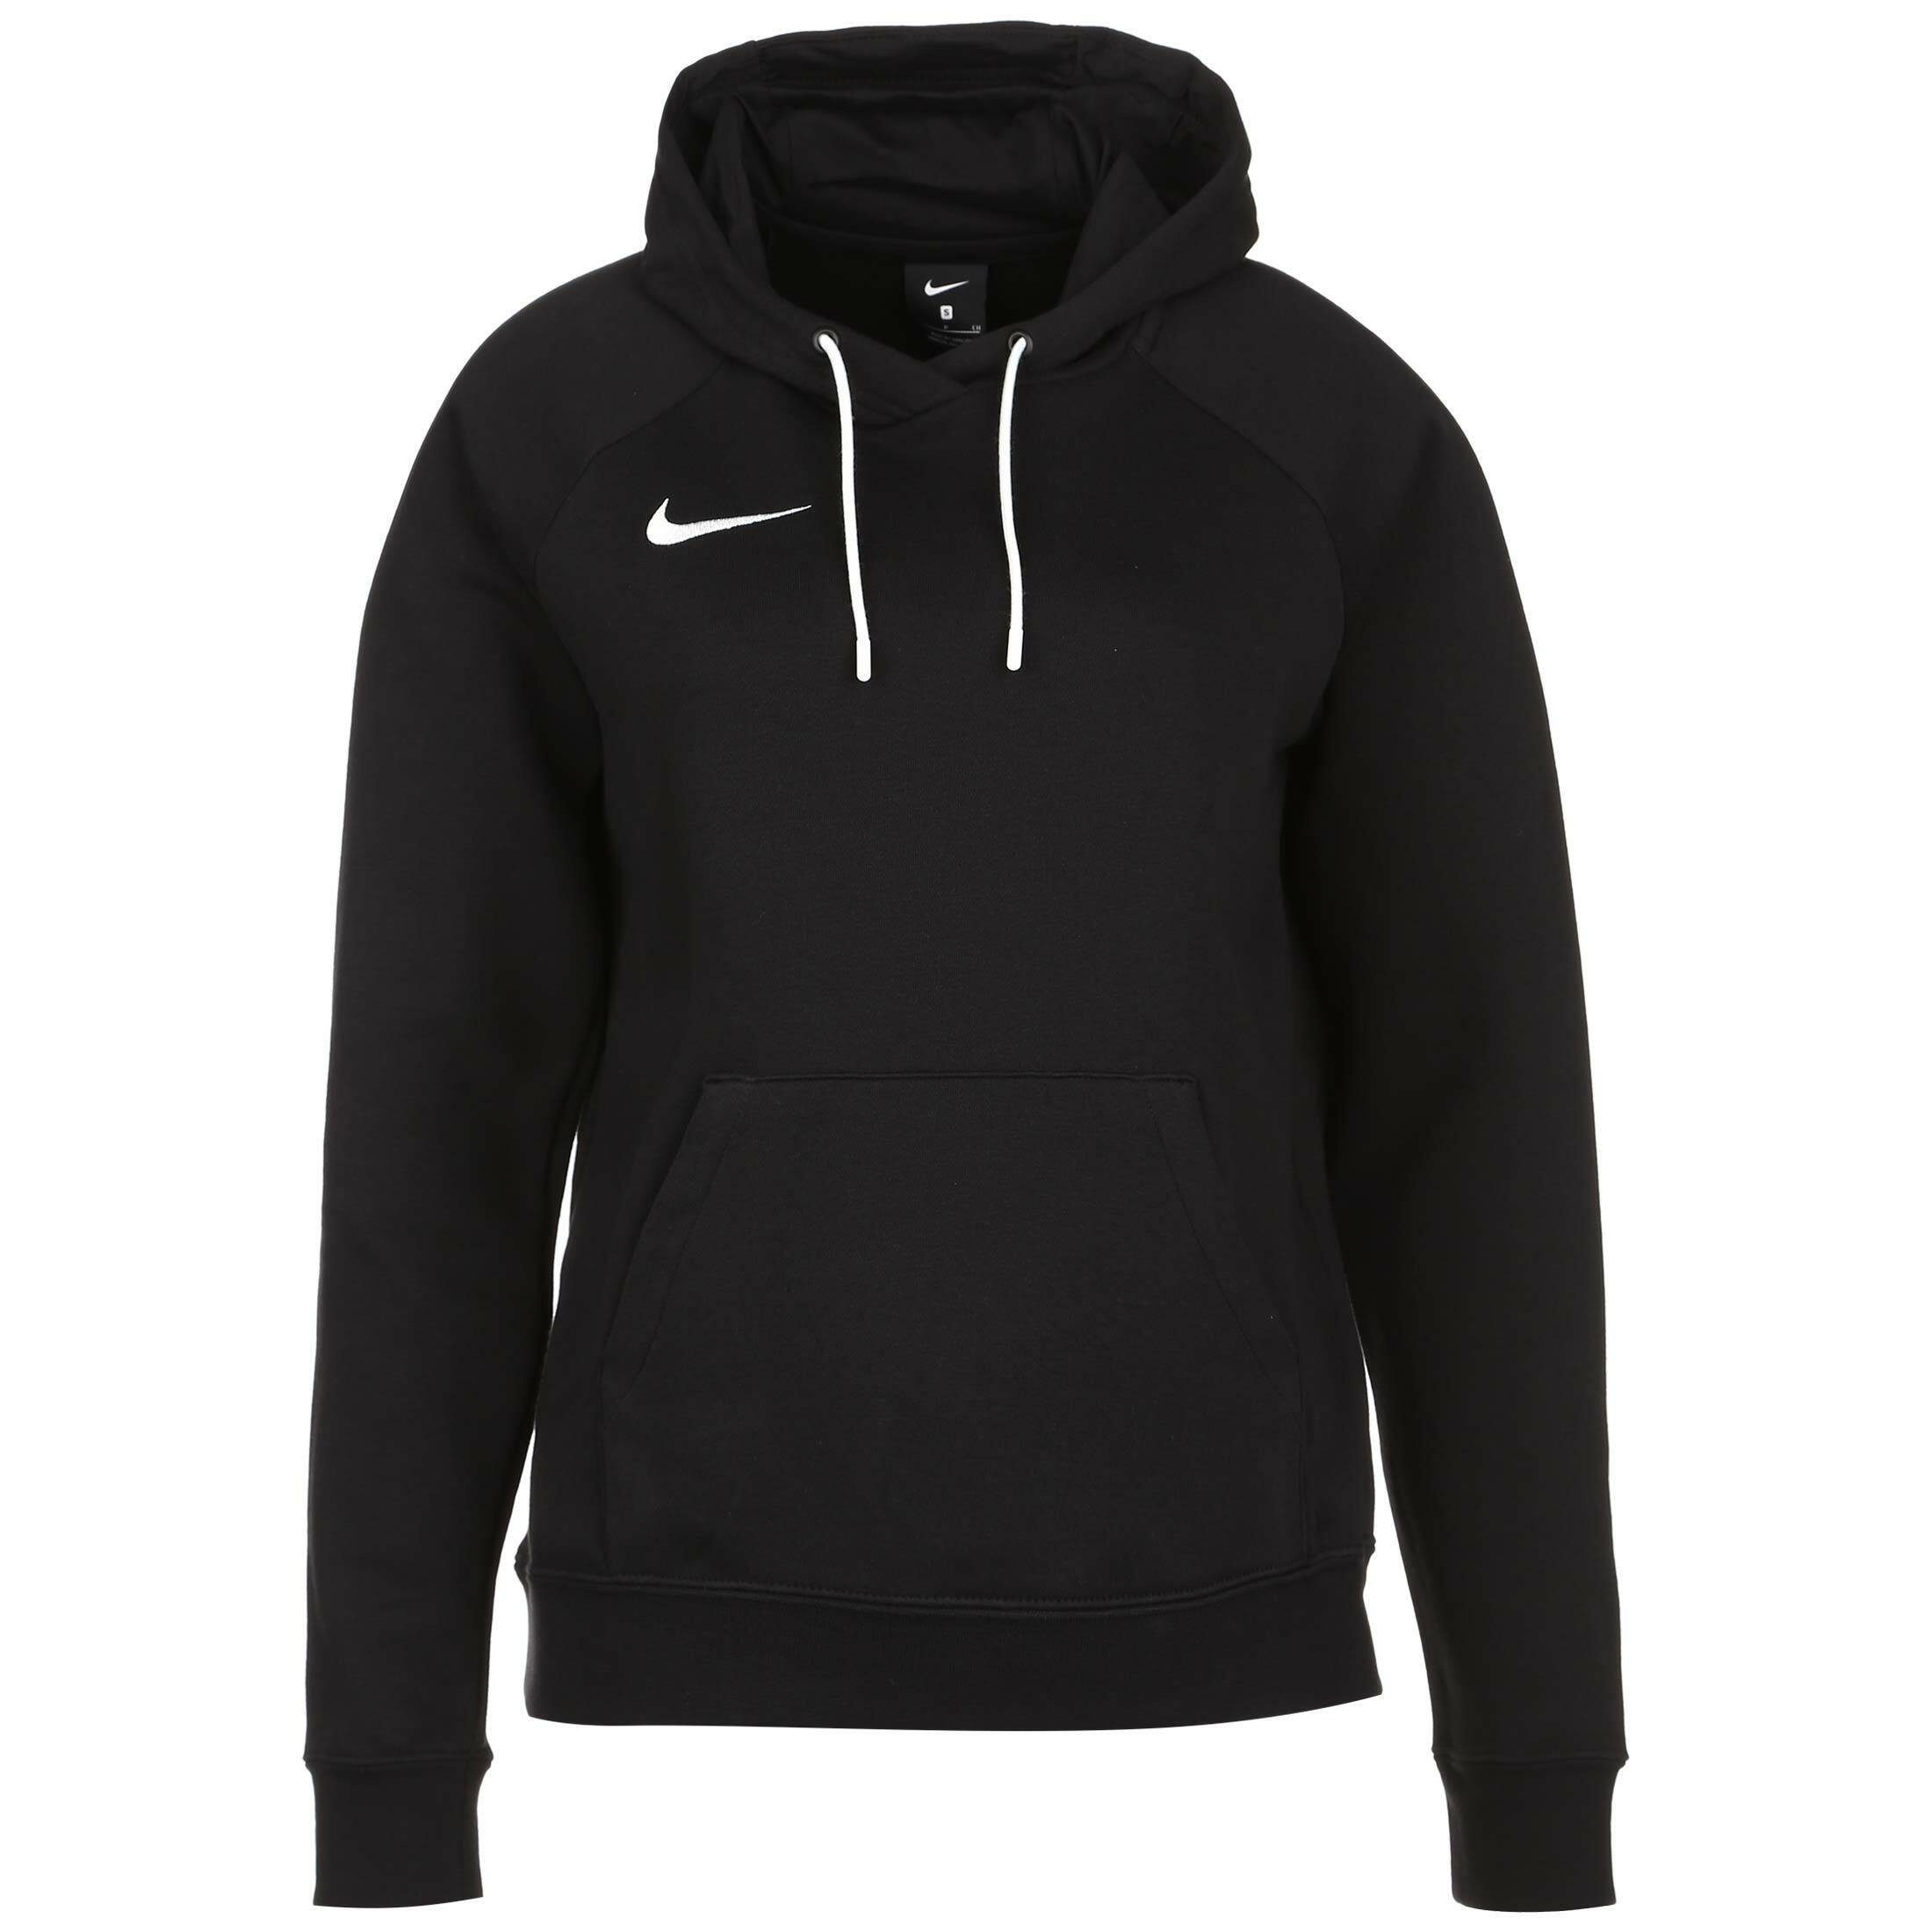 Nike Hoodies online kaufen » Nike Kapuzenpulli| OTTO